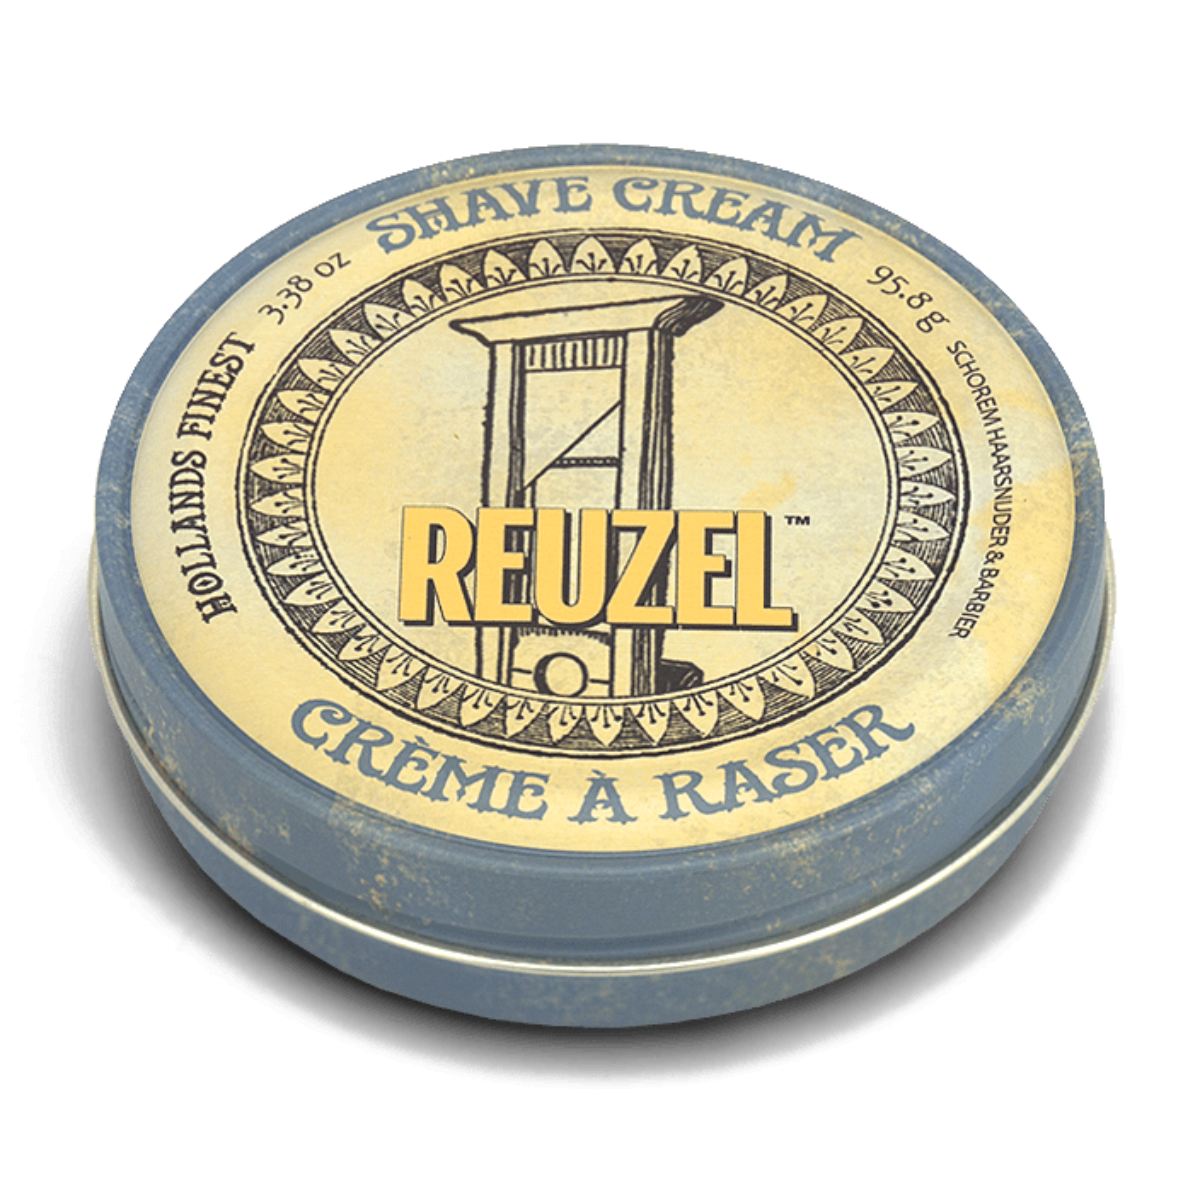 Reuzel Shave Cream - 10 oz